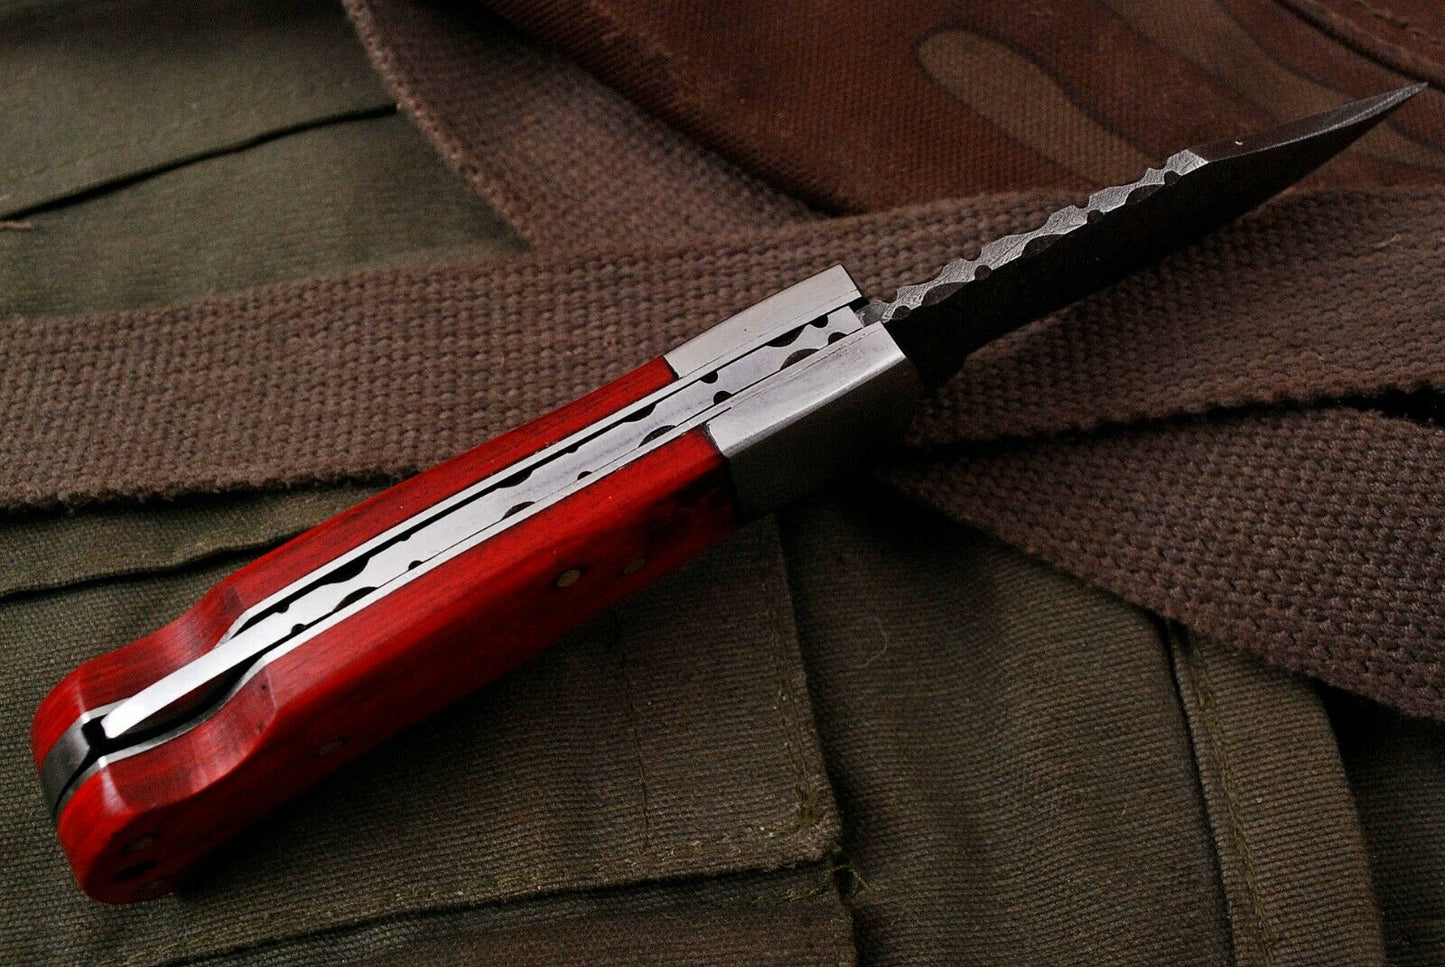 HAND FORGED DAMSACUS Steel Lockback Folding Pocket Knife Red Wood Handle